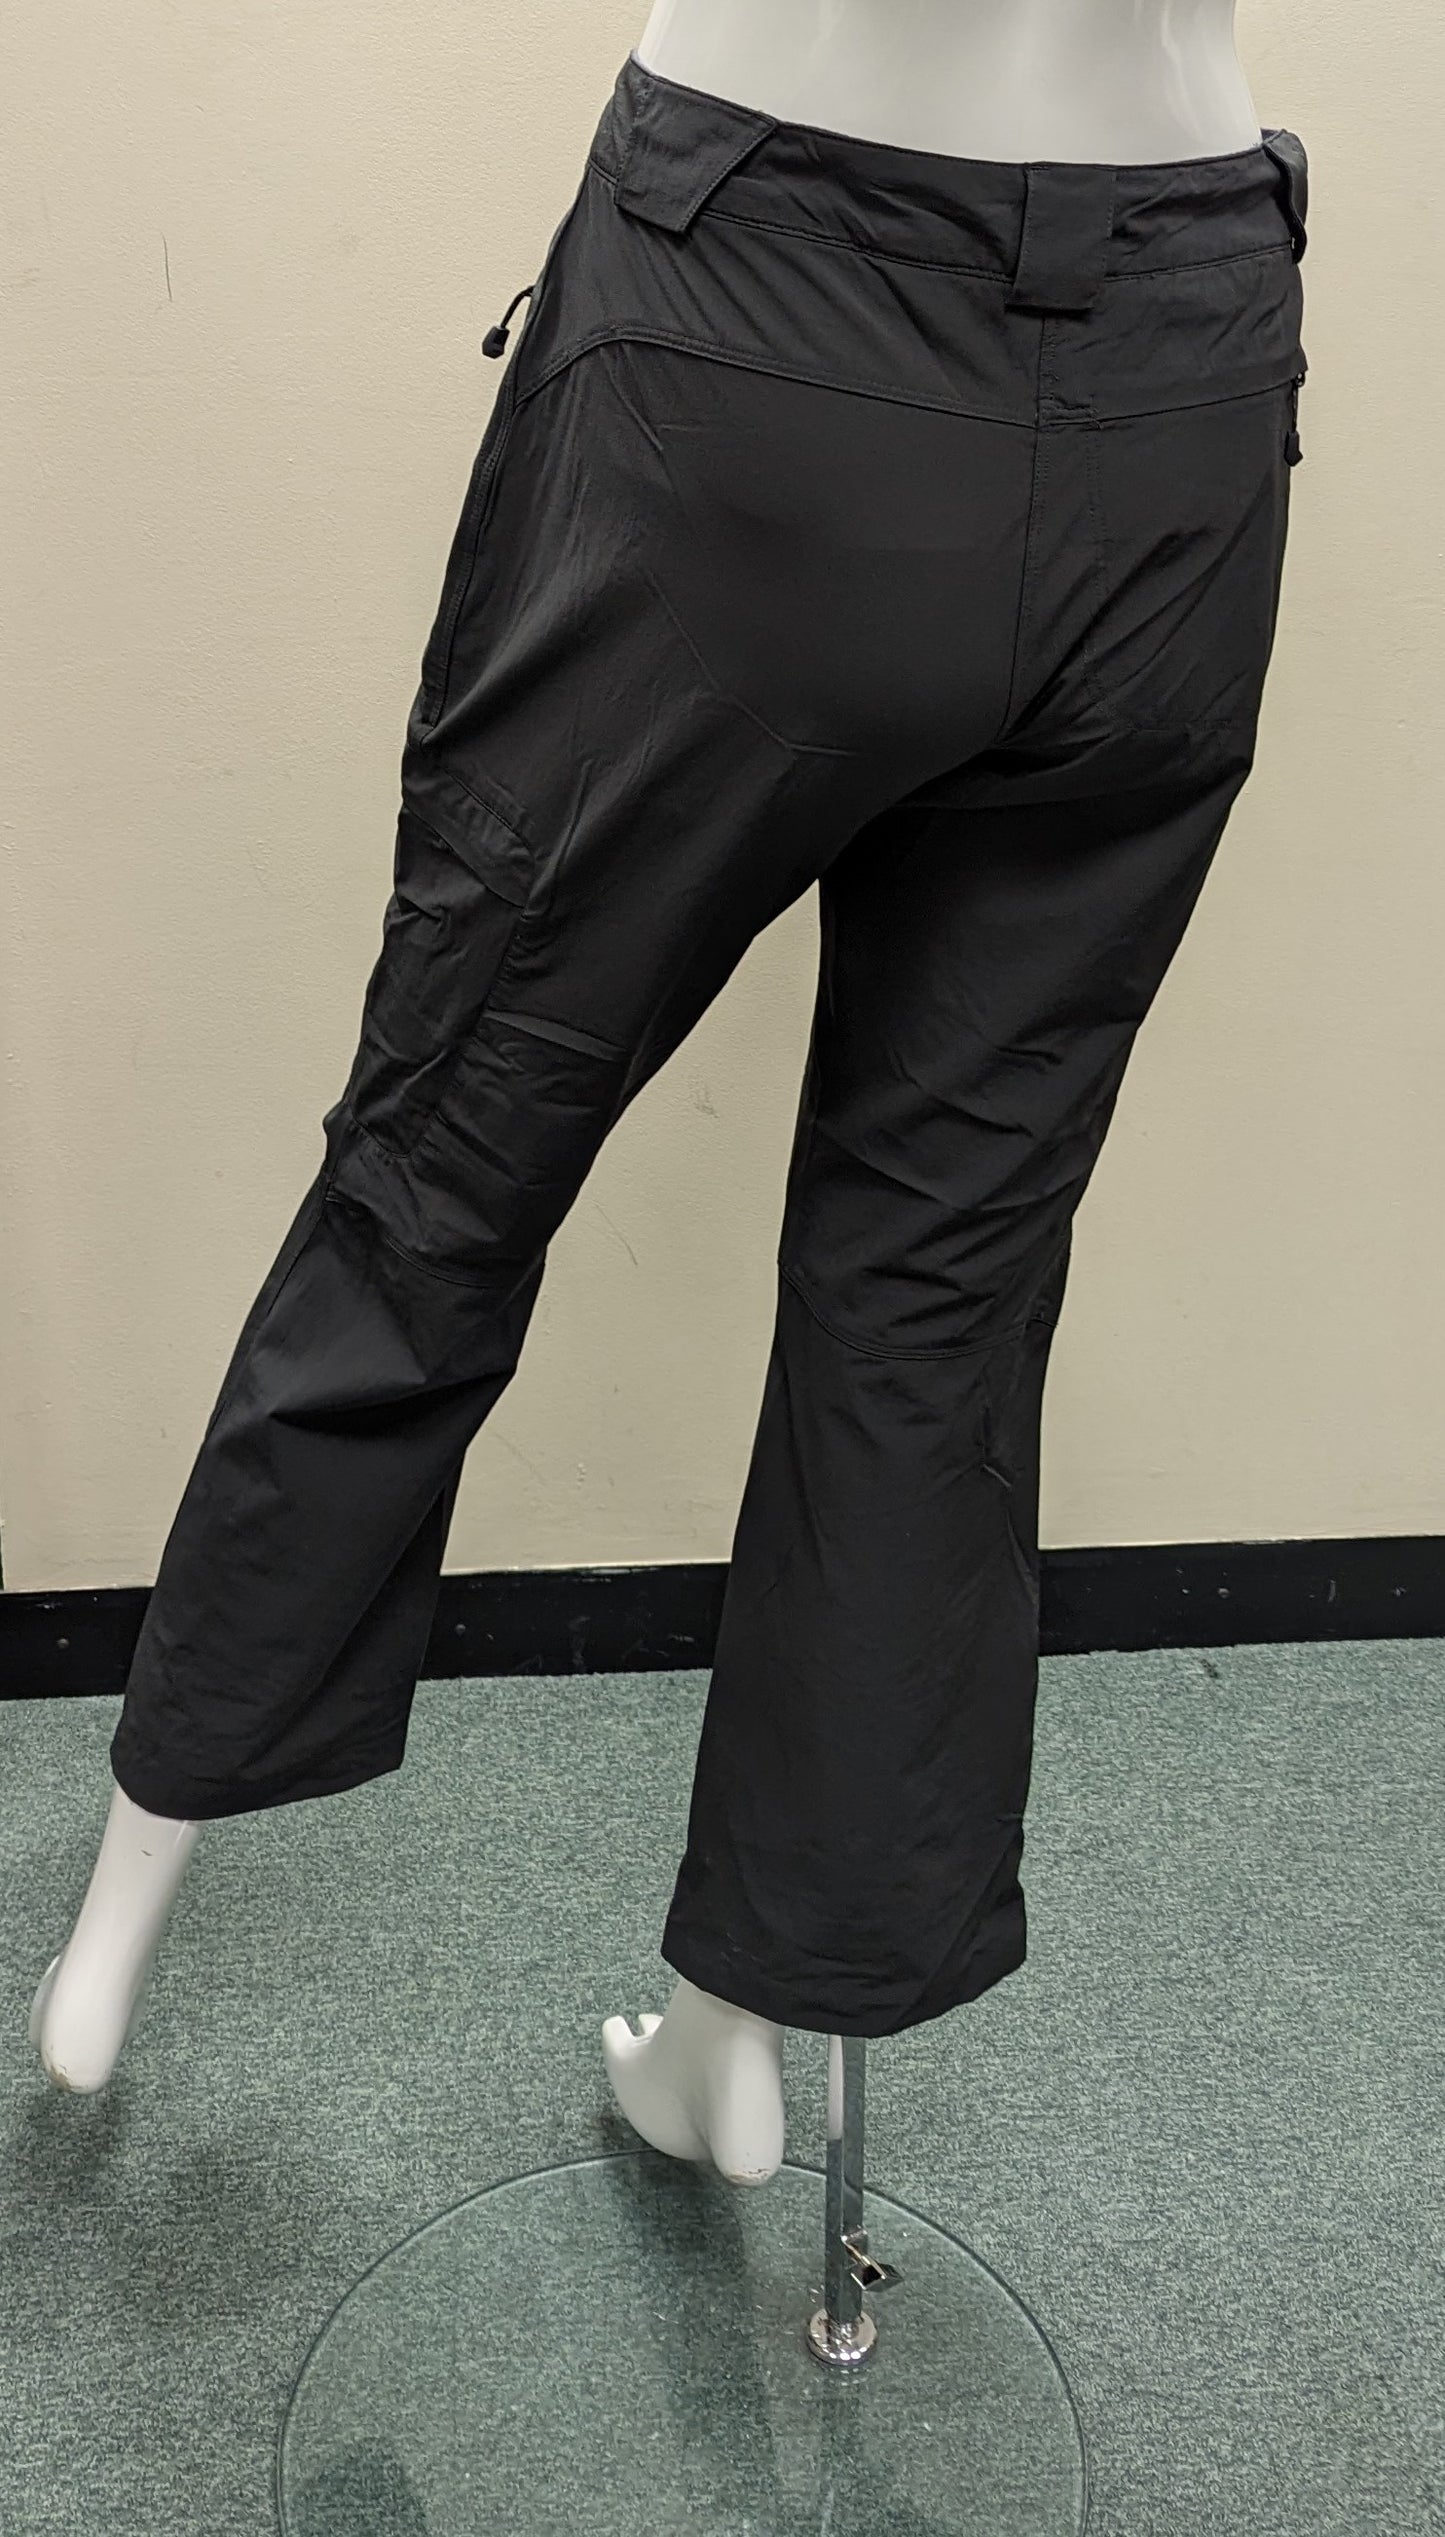 Ladies Rohan Walking Trousers - Size 12S